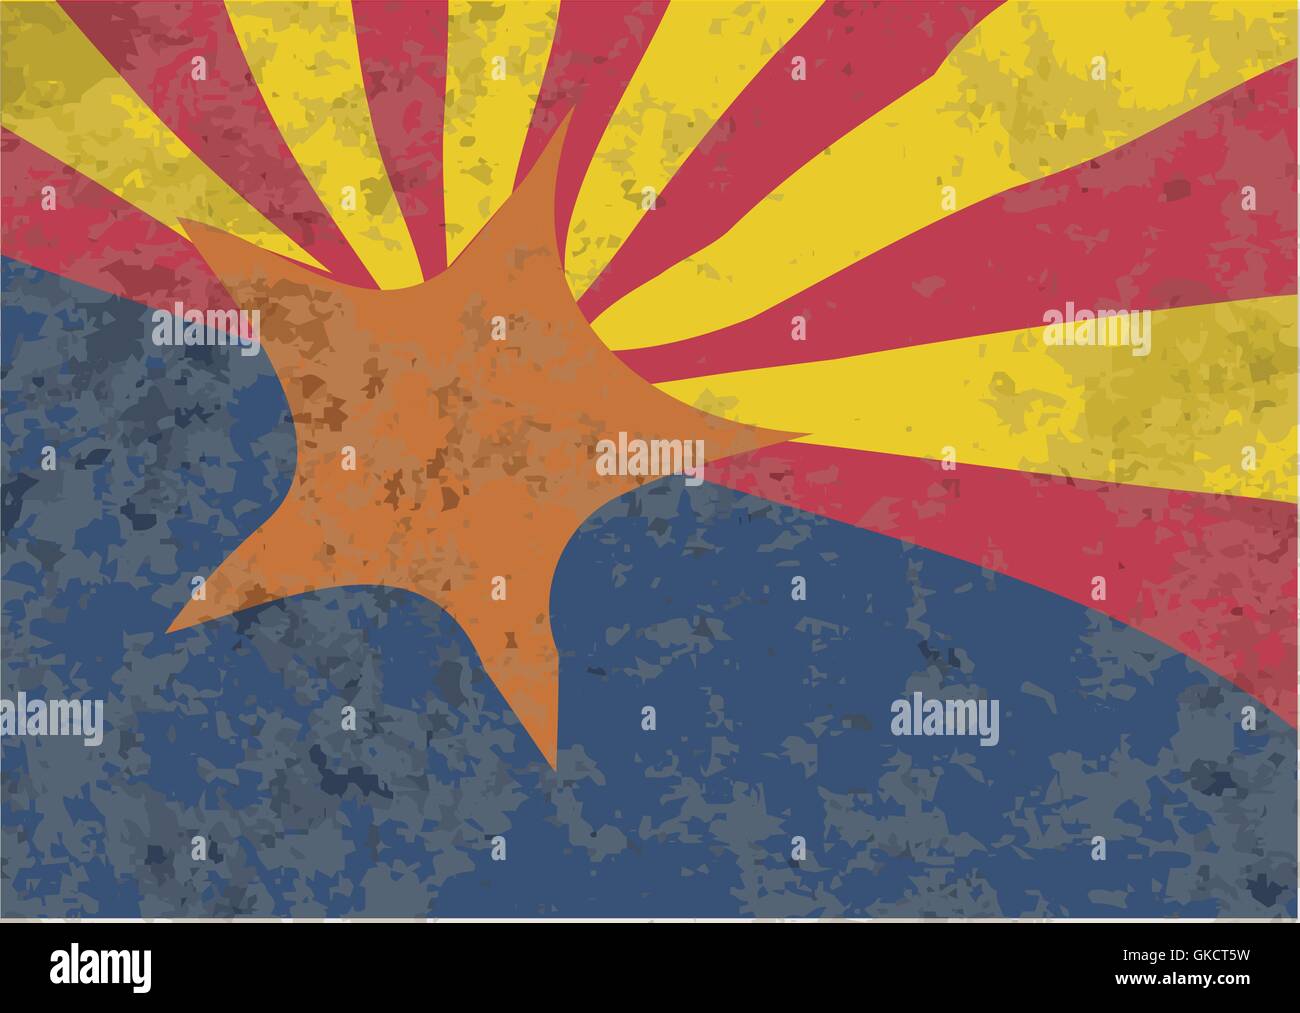 Arizona vector flag Stock Vector Images - Alamy